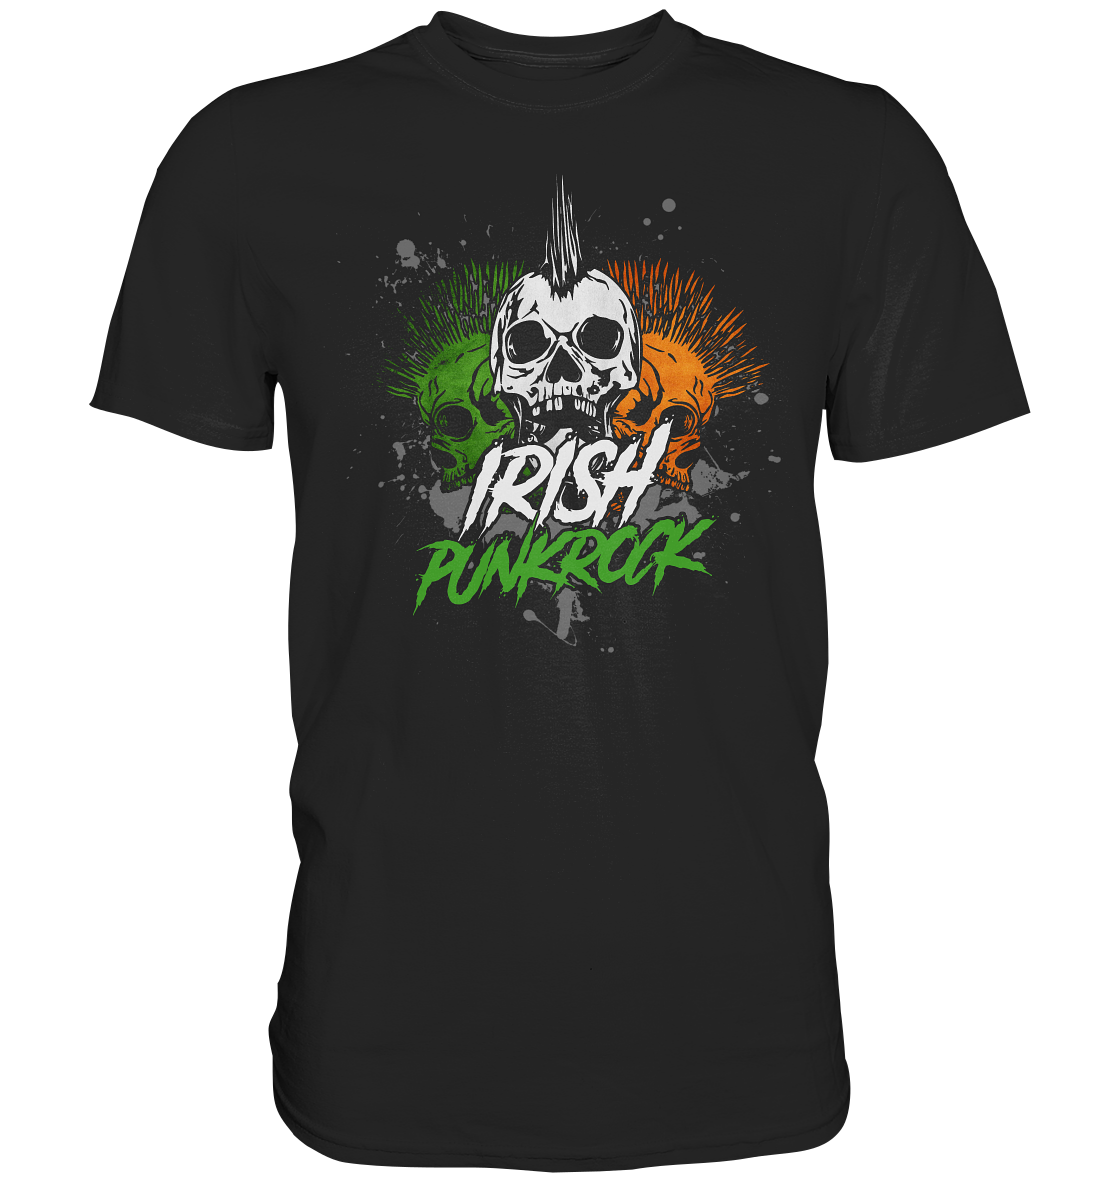 Irish Punkrock - Premium Shirt